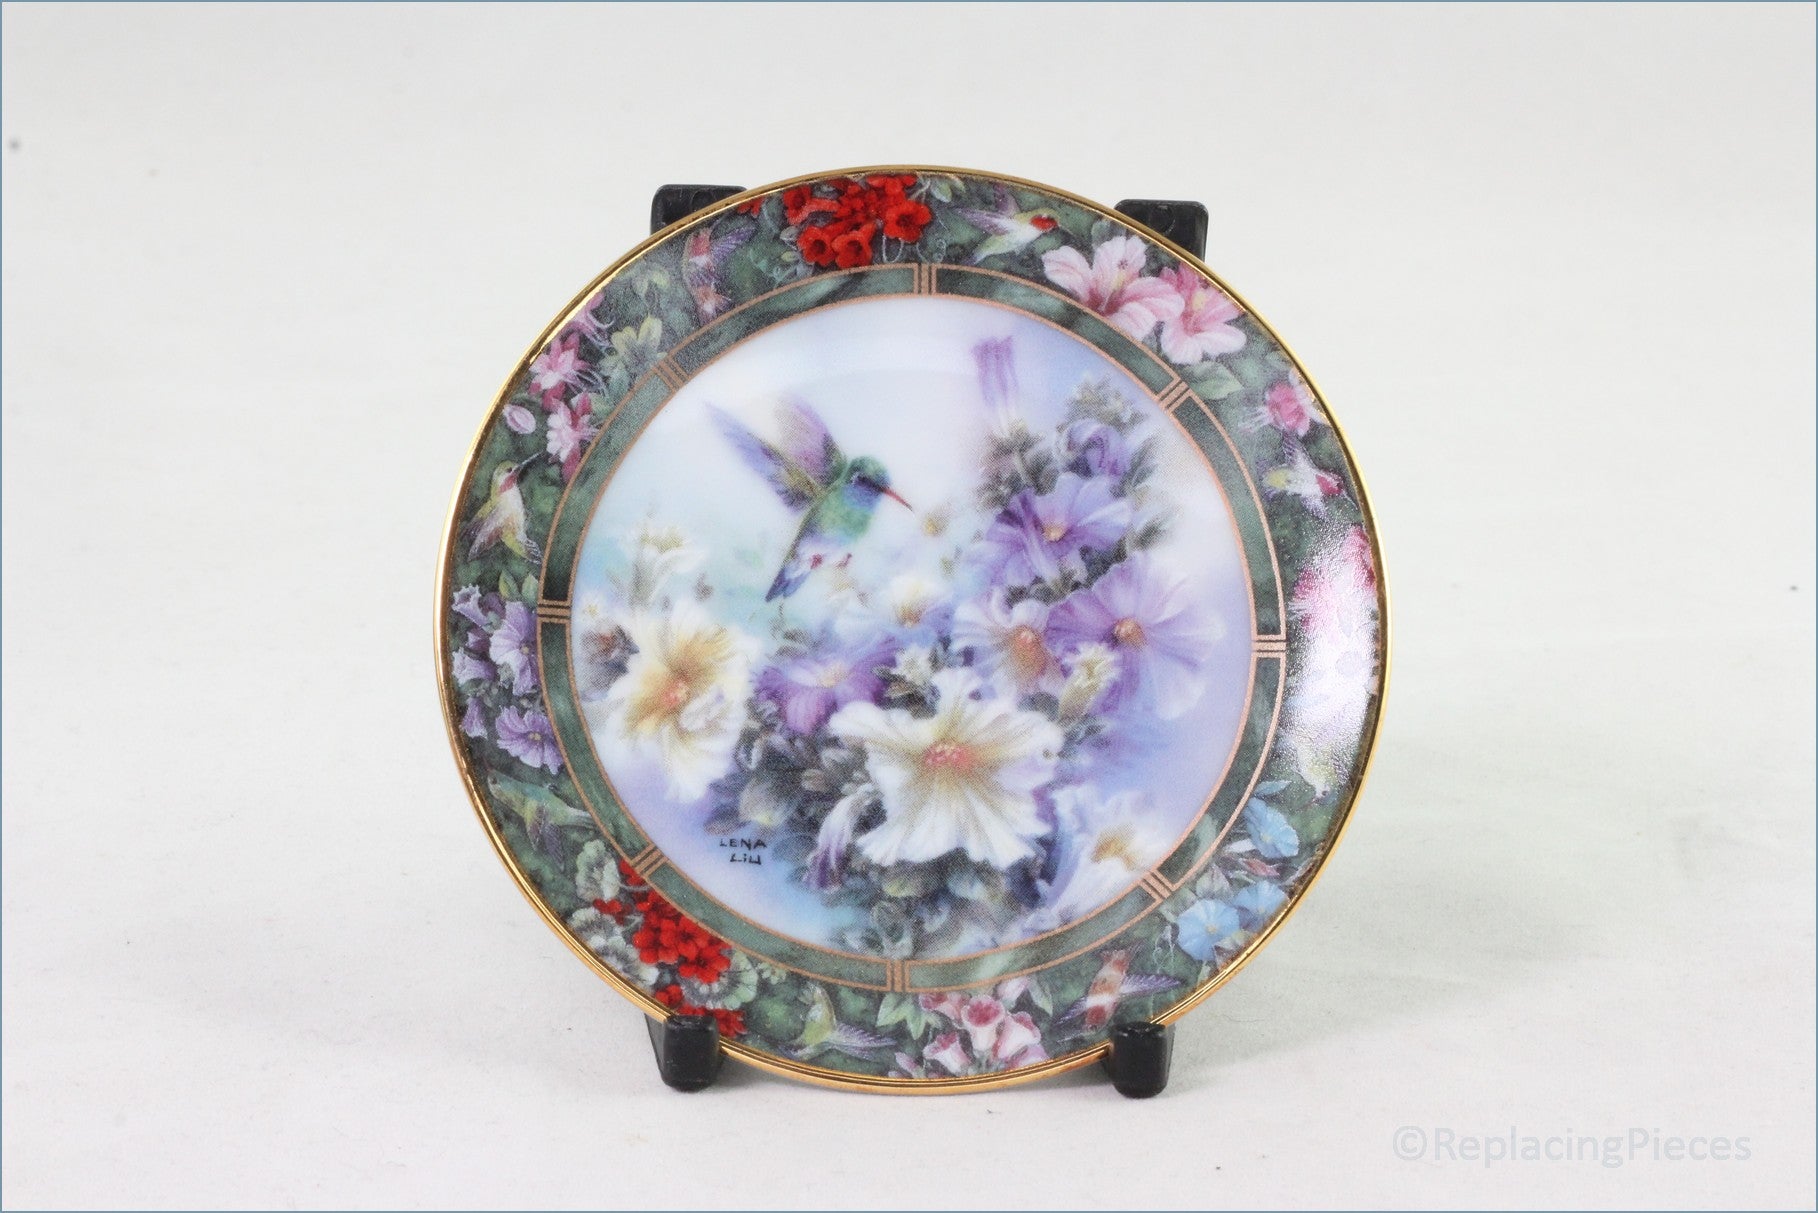 Bradford Editions - Lena Liu's Hummingbird Treasury Mini Plate Collection - Violet Crowned Hummingbird (2nd Set)